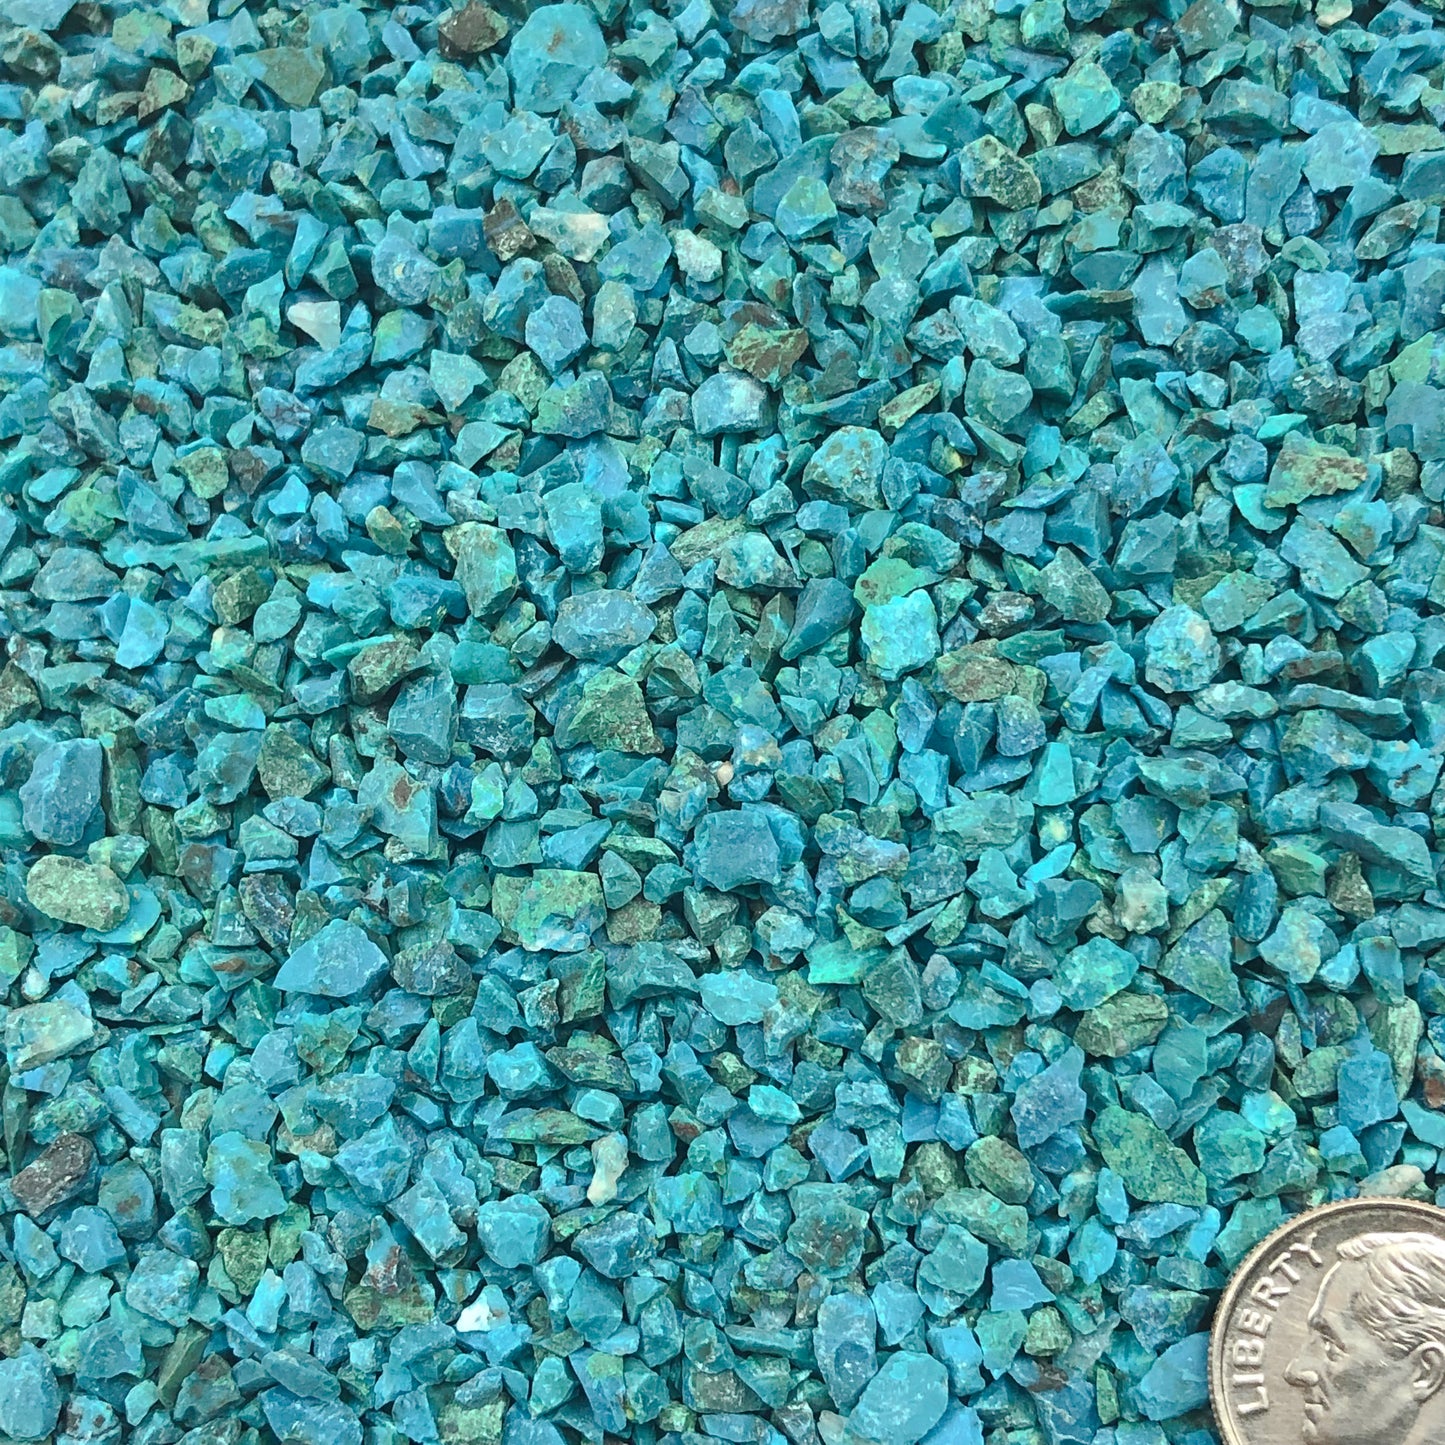 Crushed Dark Blue Chrysocolla from Peru, Coarse Crush, Gravel Size, 4mm - 2mm